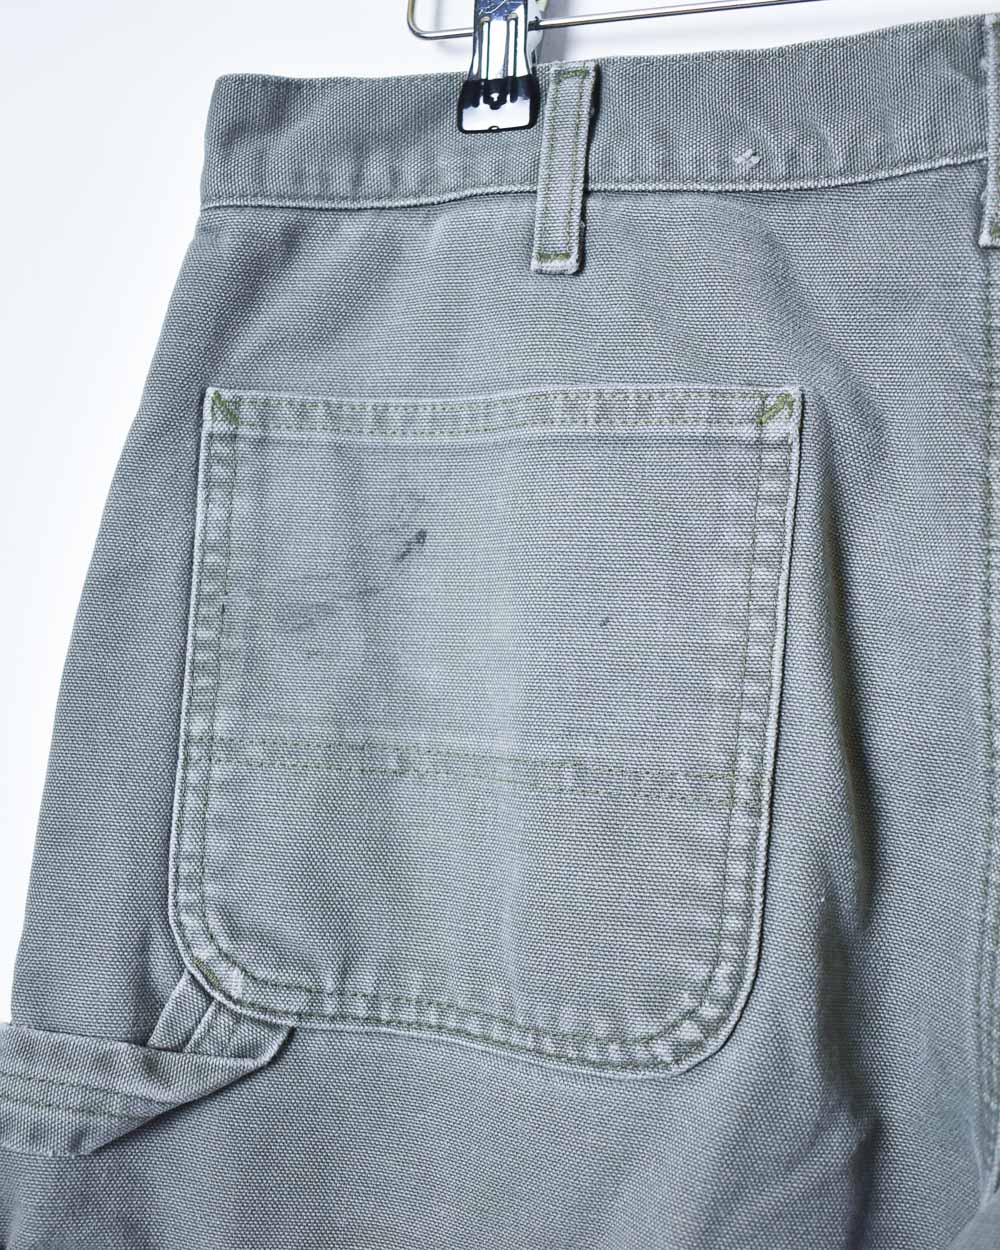 Khaki Carhartt Flannel Lined Carpenter Jeans - W36 L32